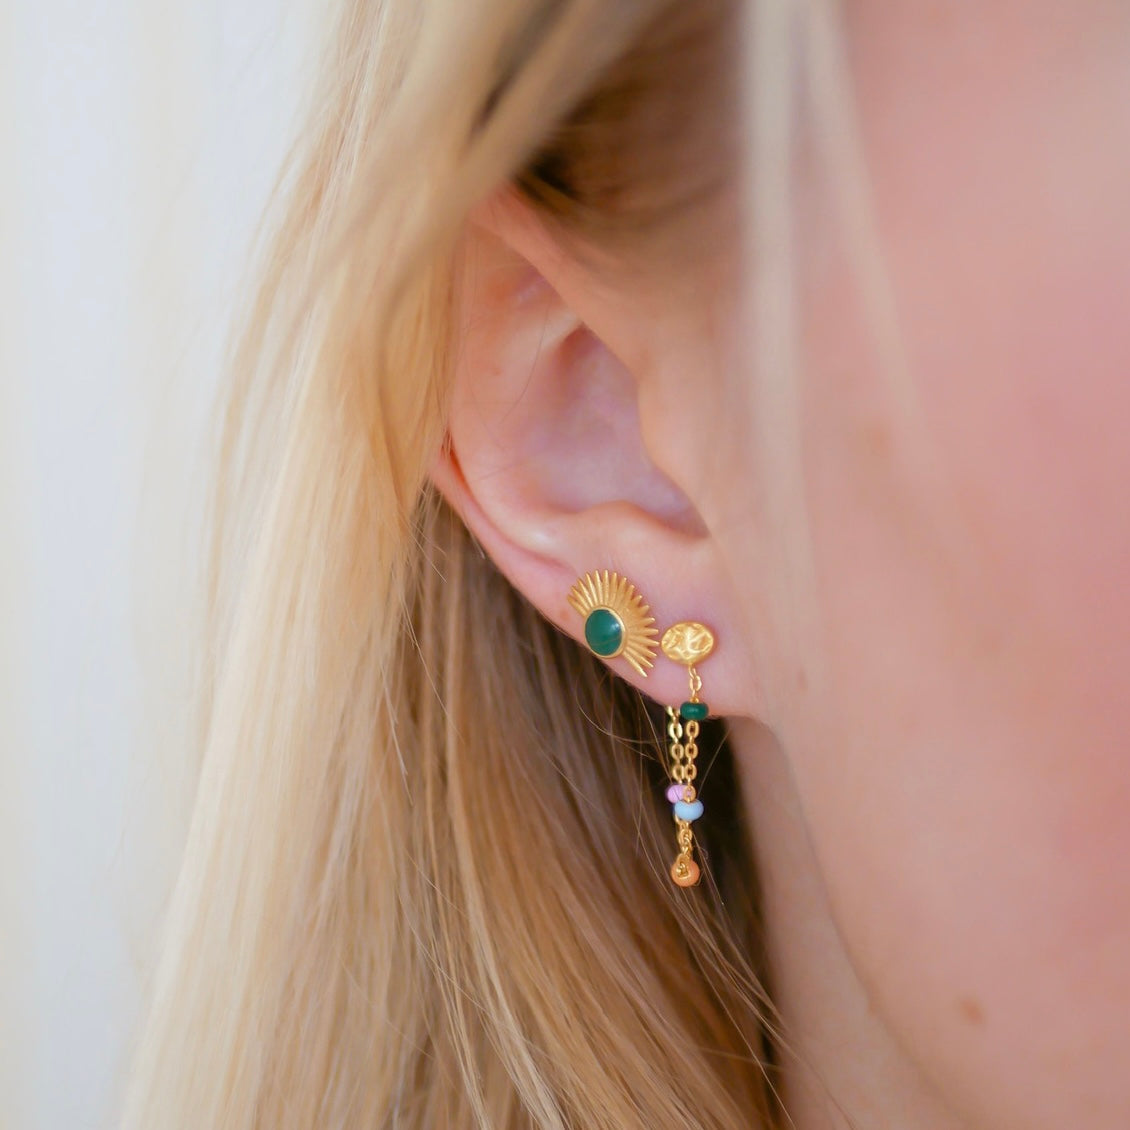 Soleil 'Petrol Green' 18k gold-plated Earring Studs